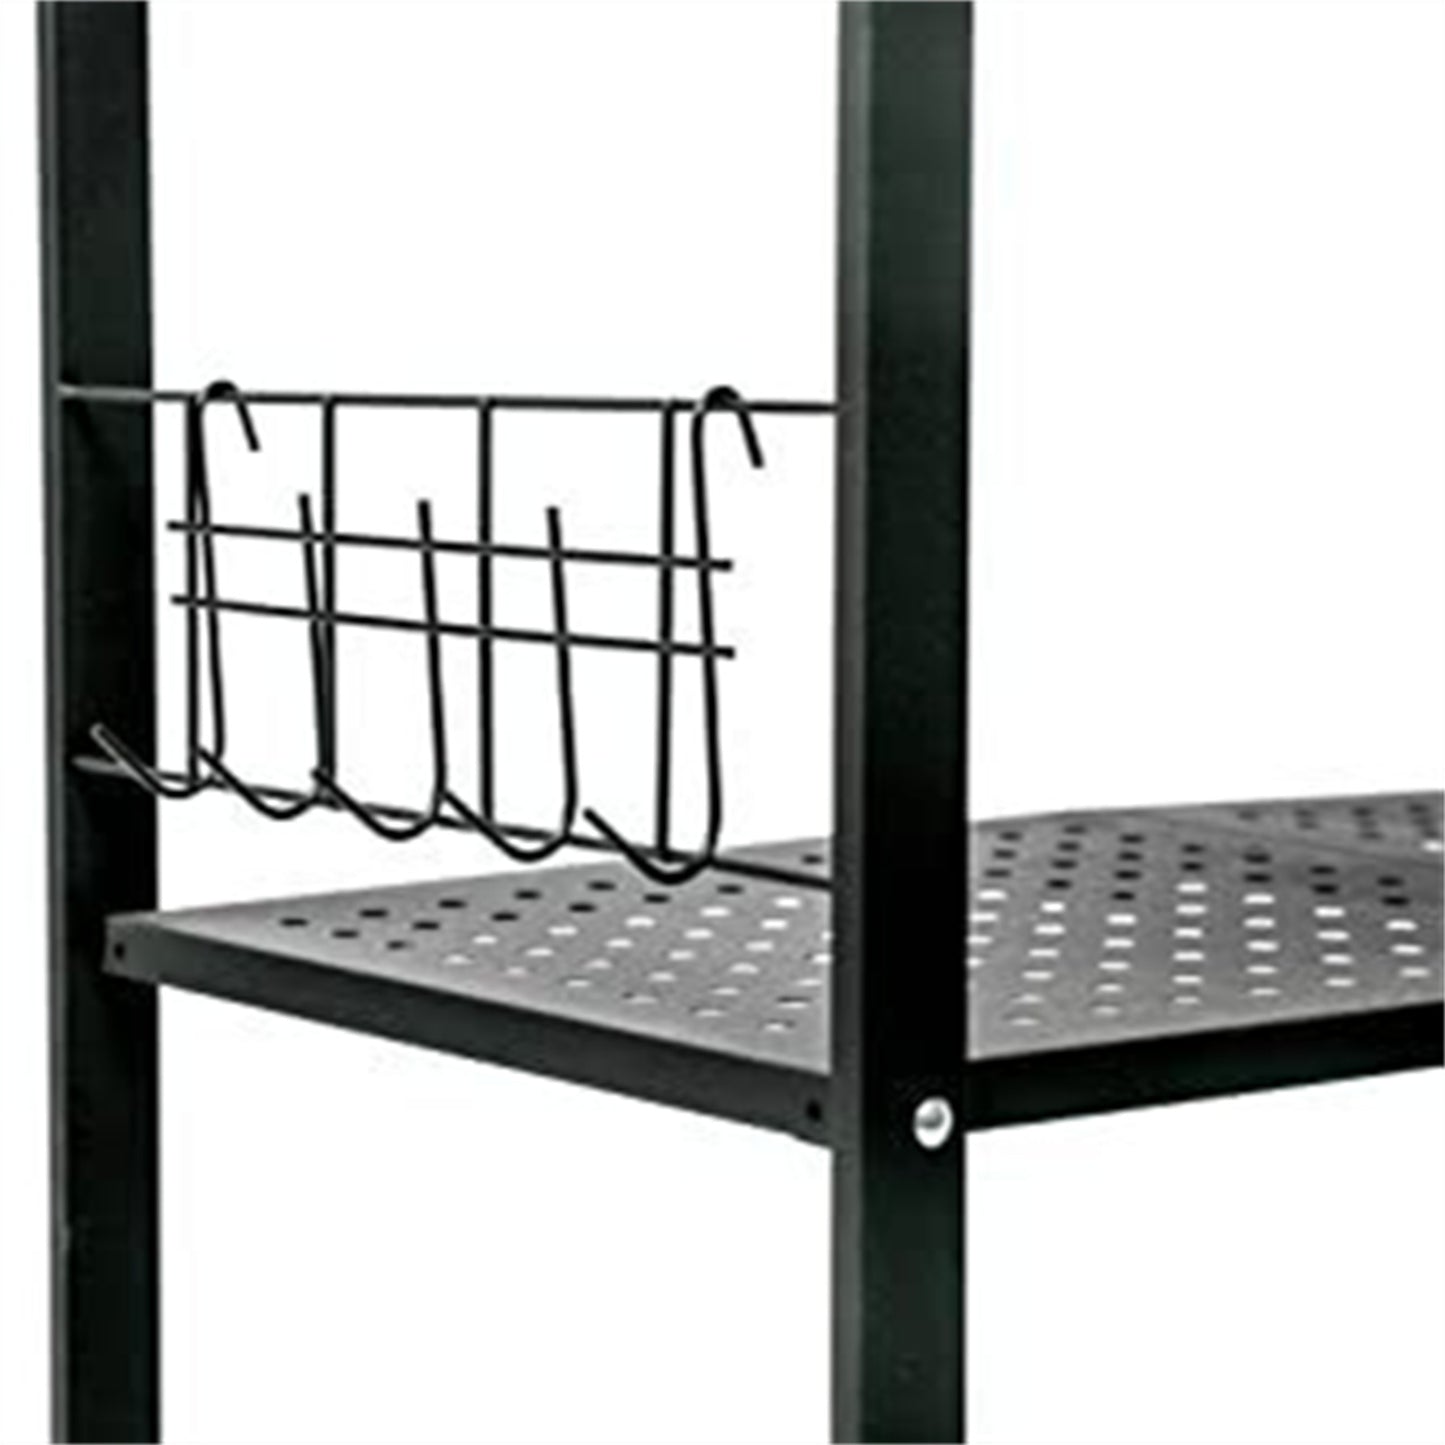 3-Tier Foldable Storage Shelves With Wheels, Metal Folding Organizer Rack